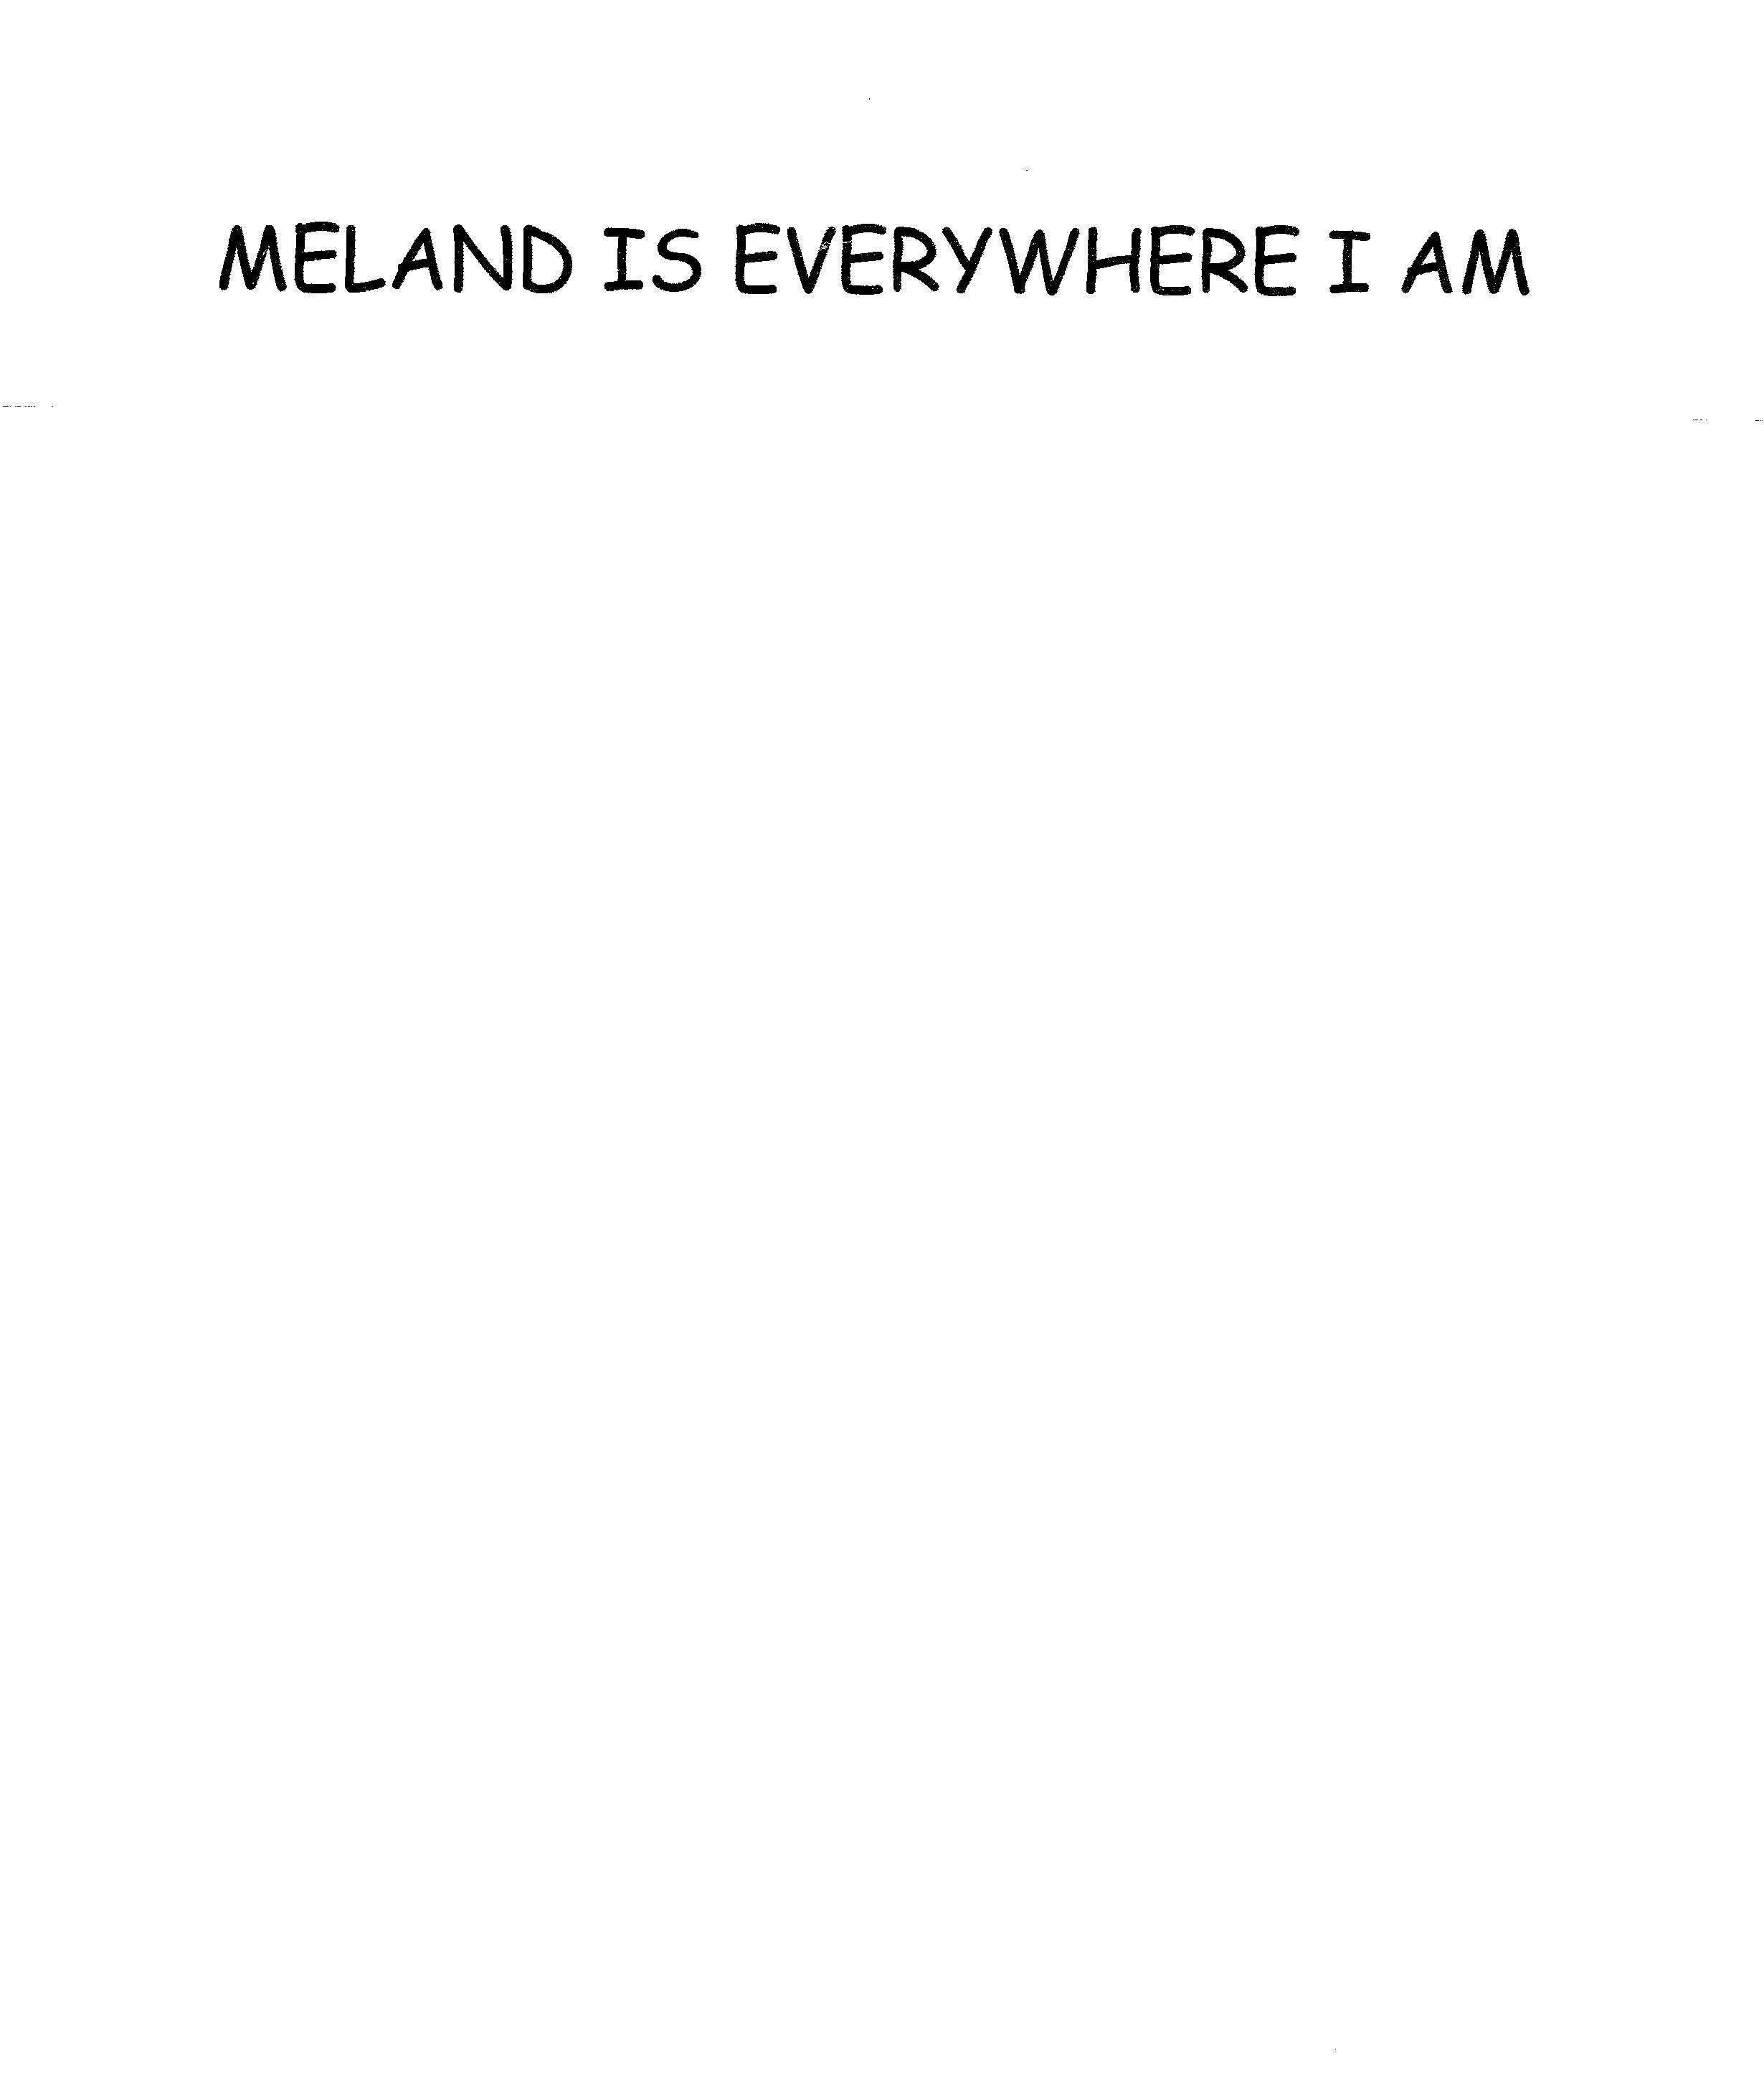 meland is everywhere i am